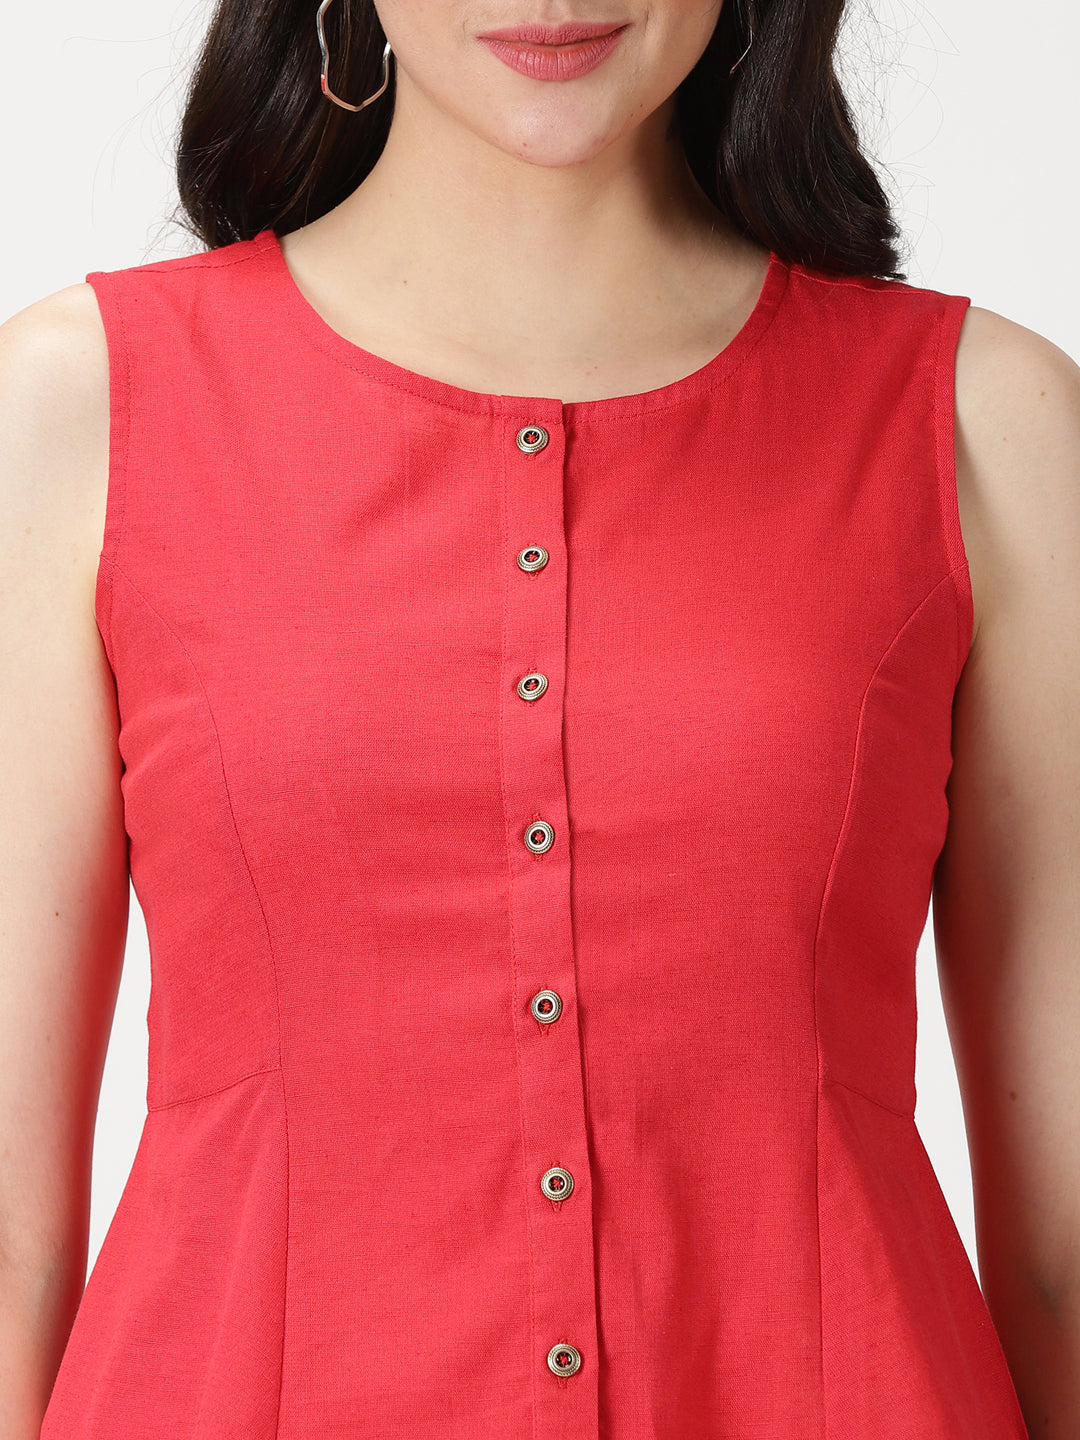 Red Cotton Linen Button-Down A-Line Top